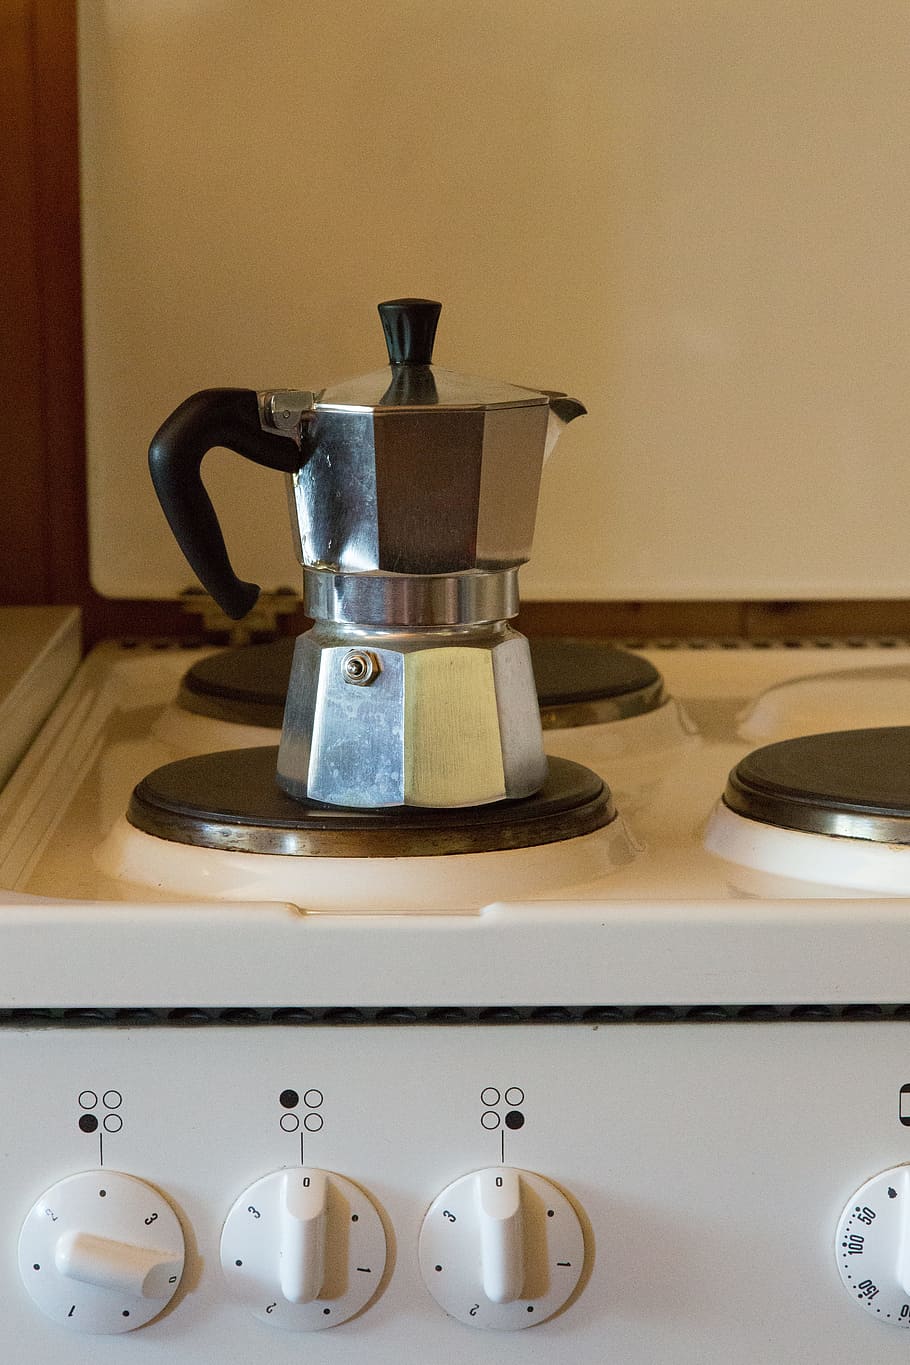 Coffee, Old, Espresso, Bialetti, Oven, retro, formerly, nostalgia, past, appliance